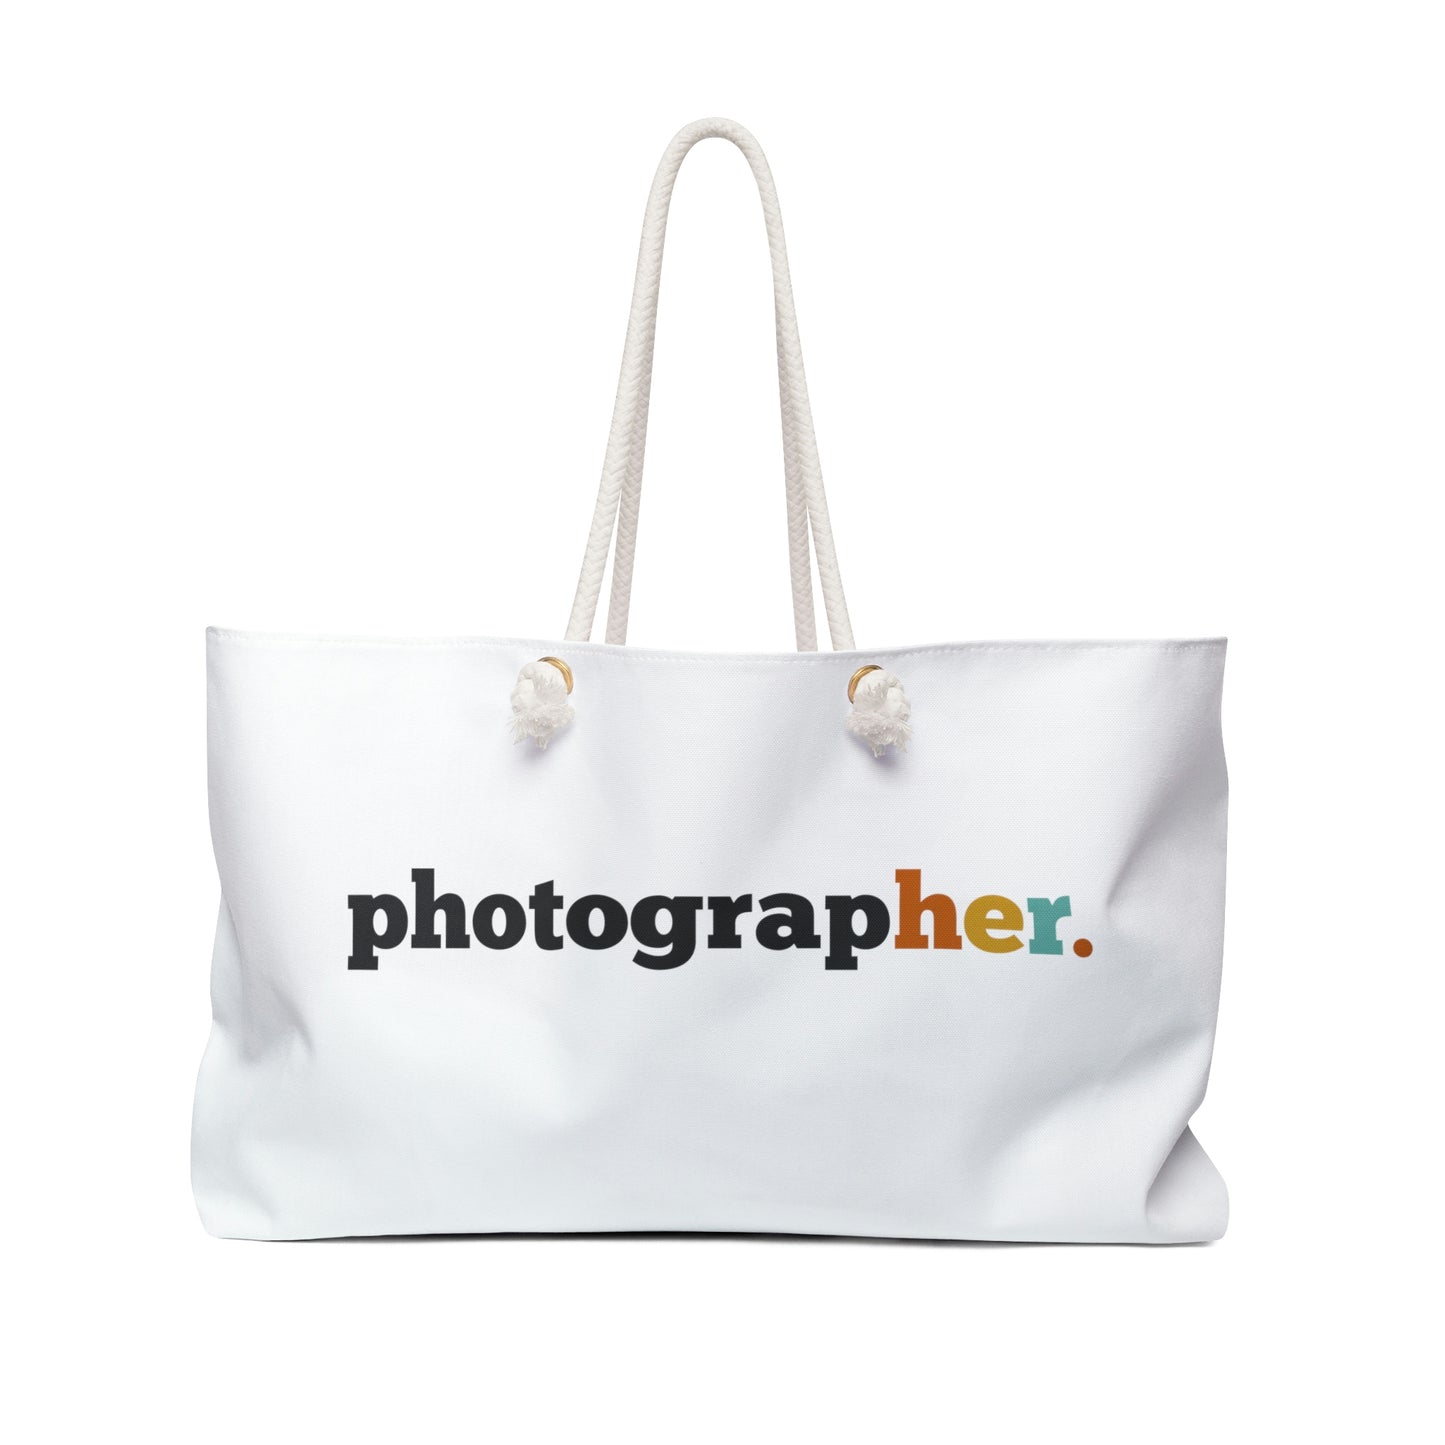 PhotograpHER HS Weekender Bag